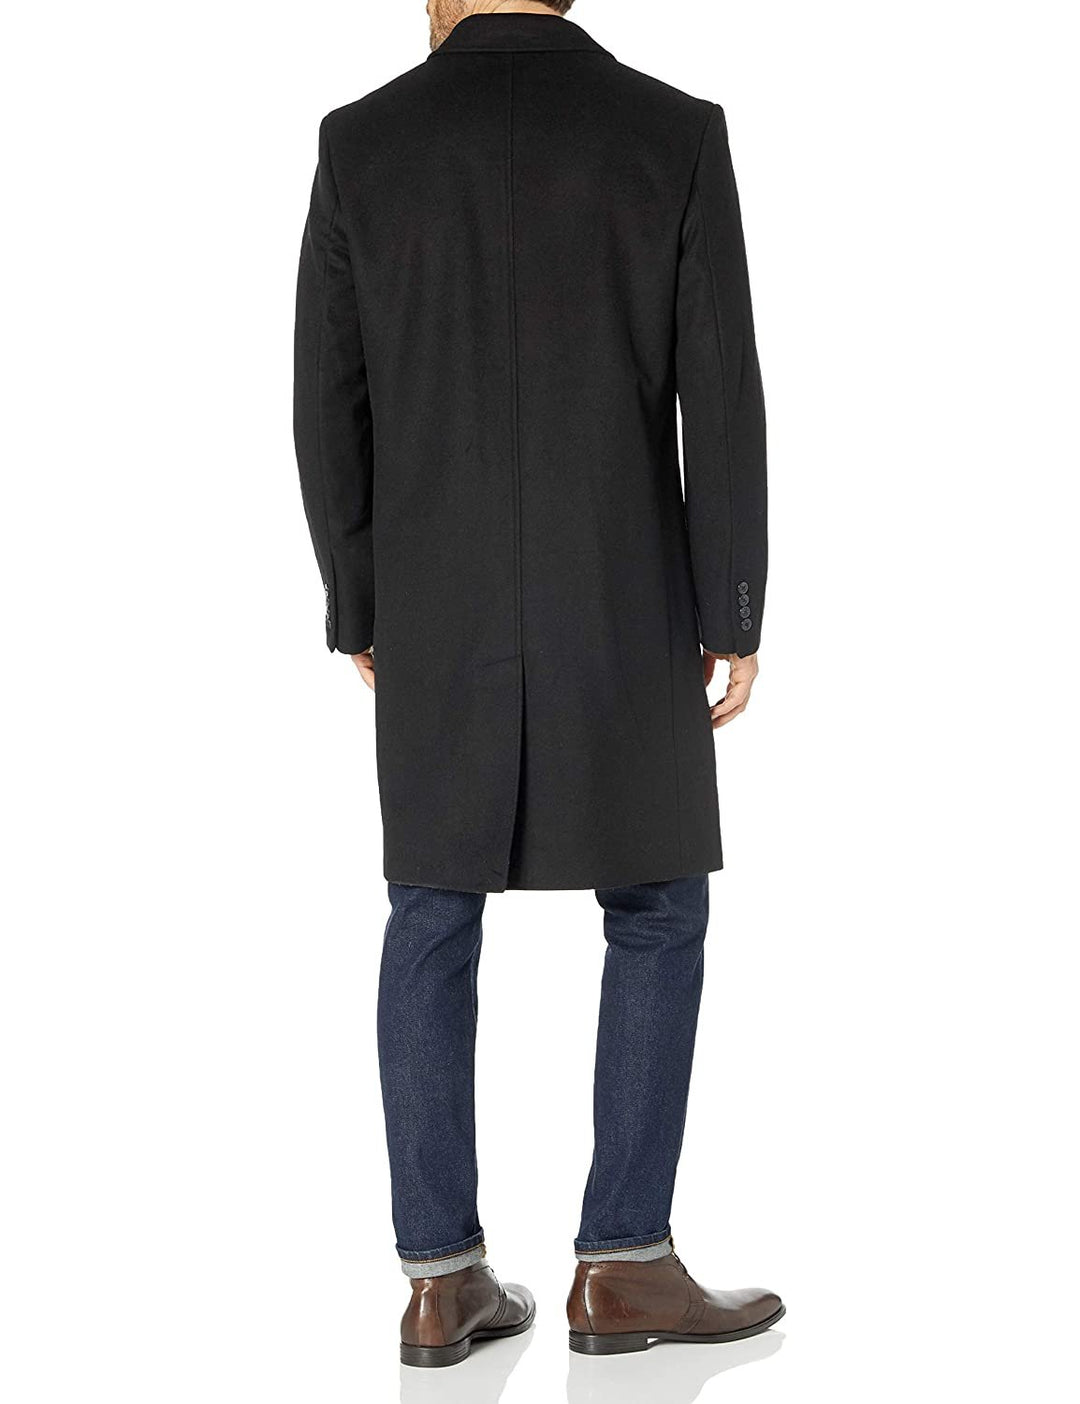 LONDON FOG Men's Classic Fit Overcoat Signature Wool Blend Top Coat (Regular & Big-Tall Sizes)